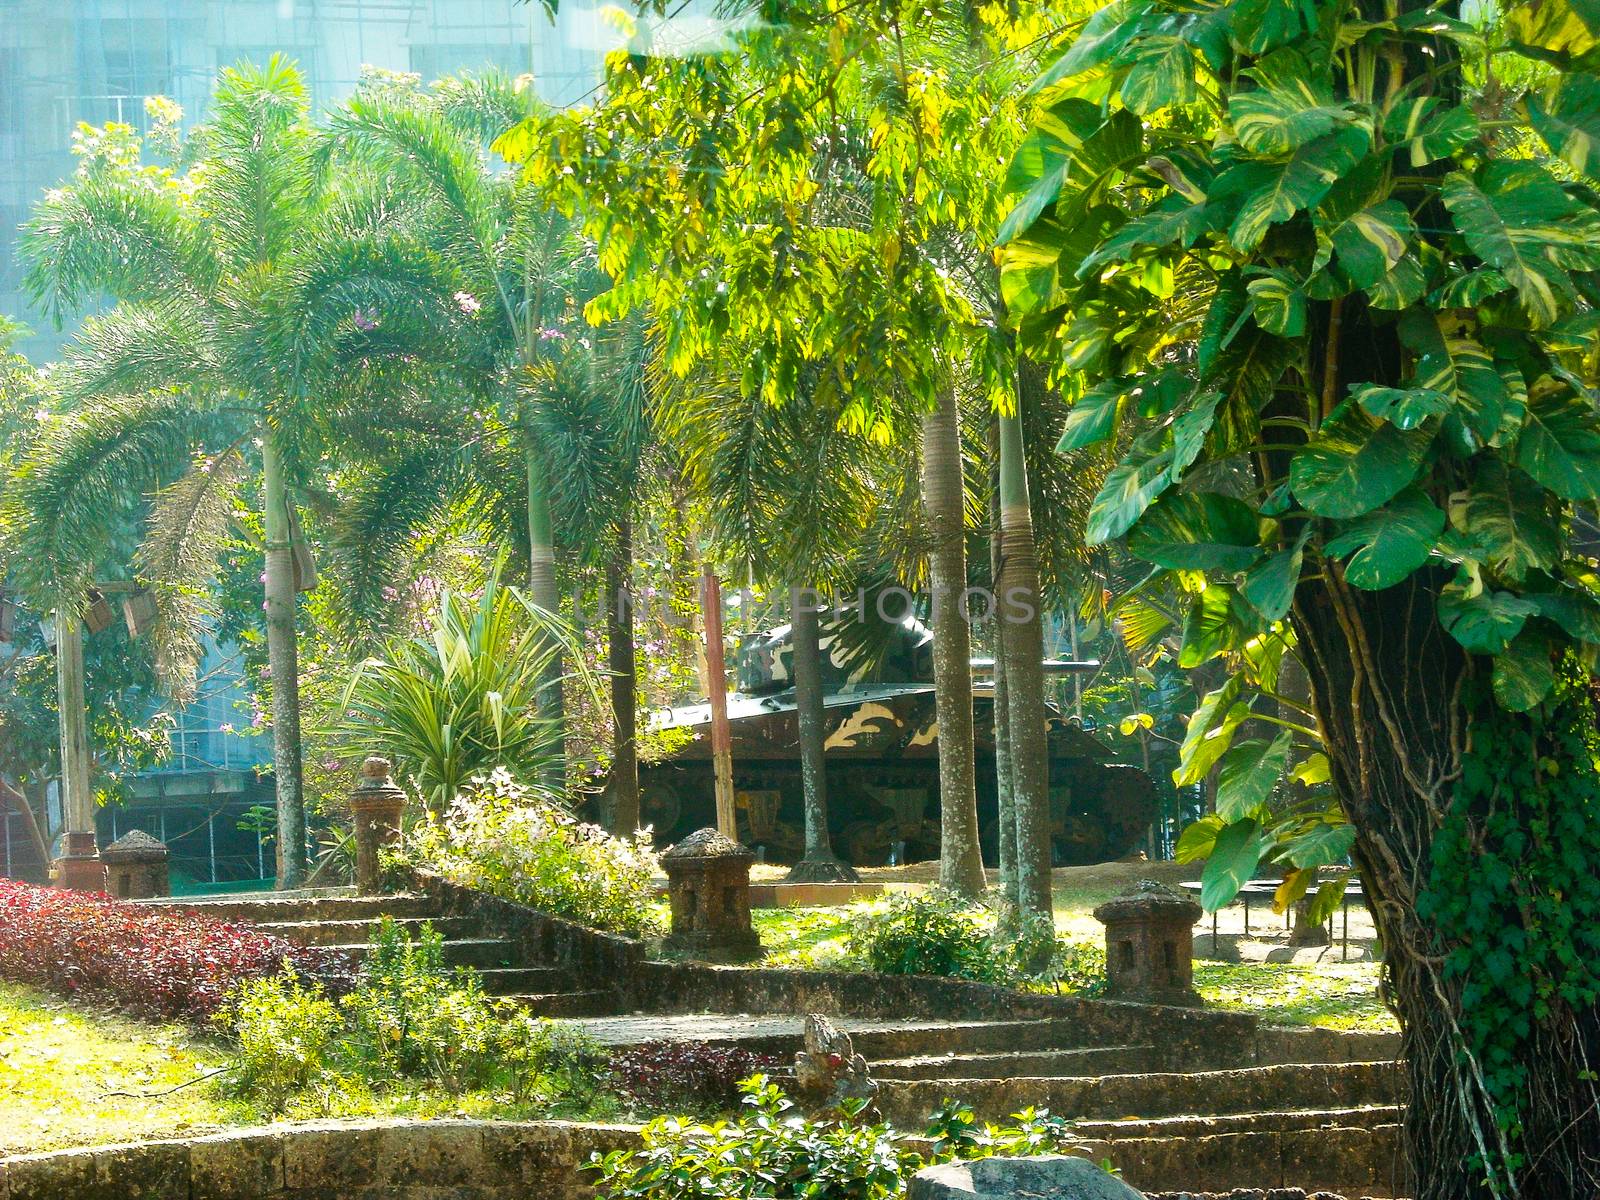 a nice tropical garden in burma by Tevion25